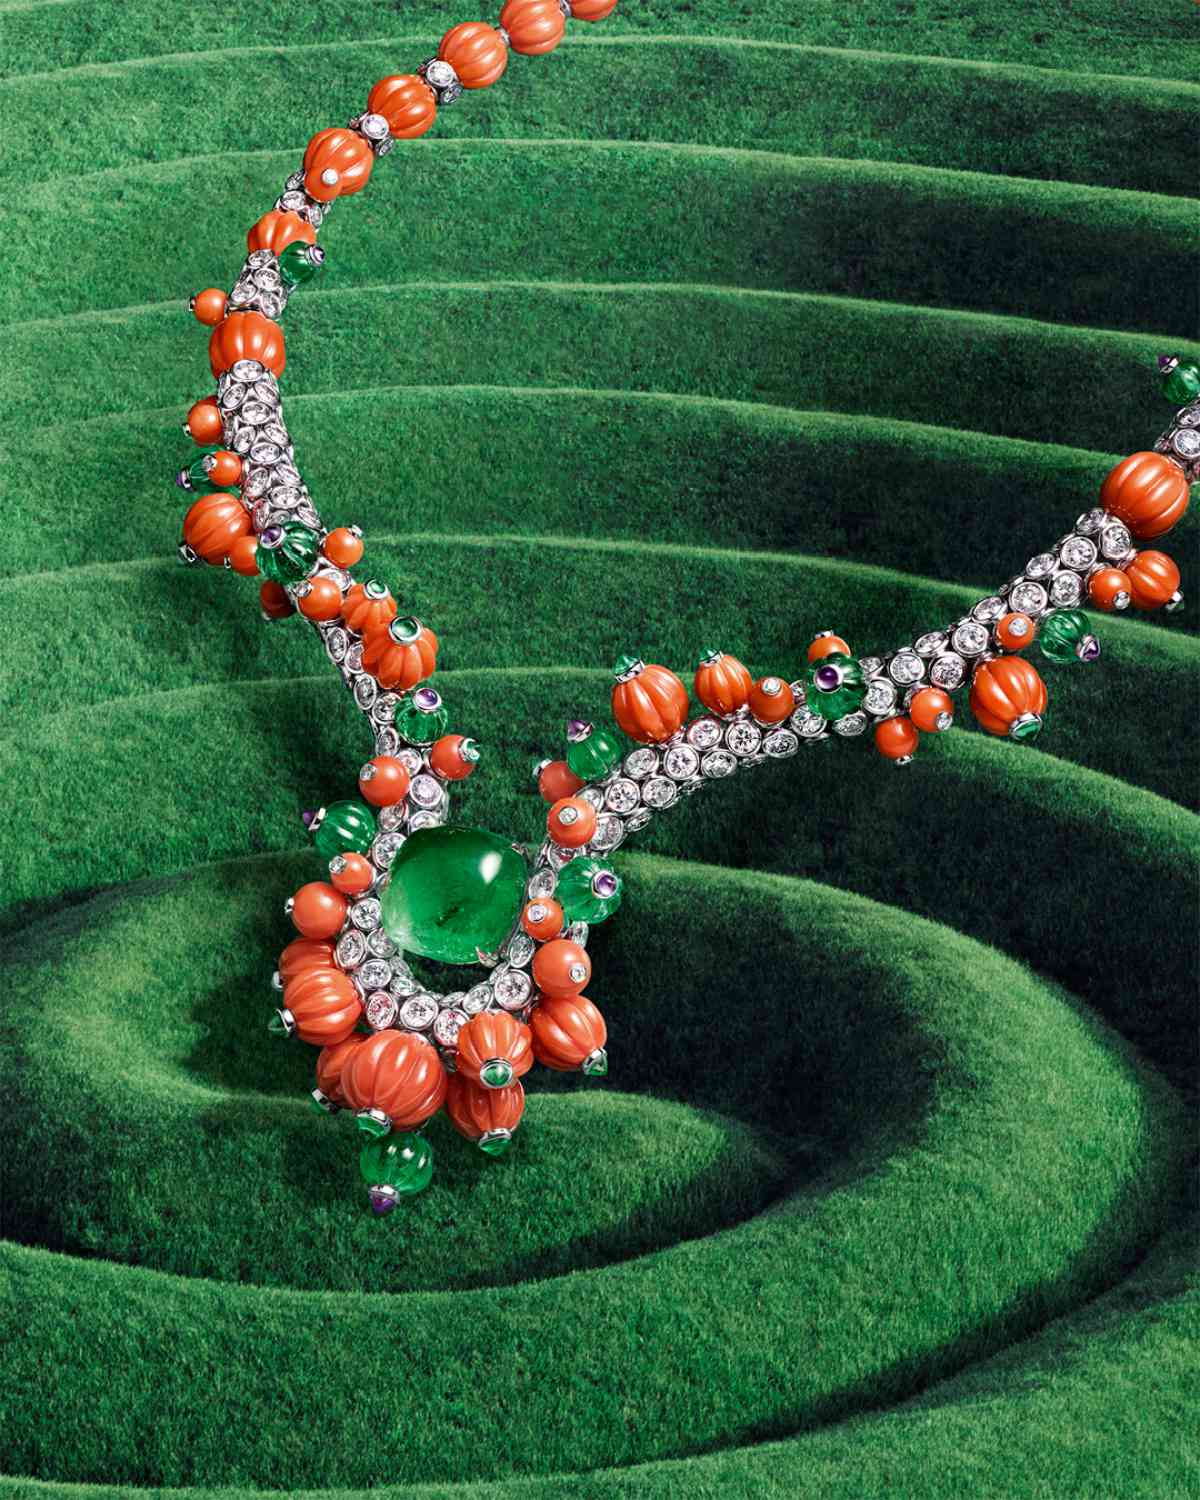 Cartier Presents Its New High Jewellery Collection: Beautés Du Monde